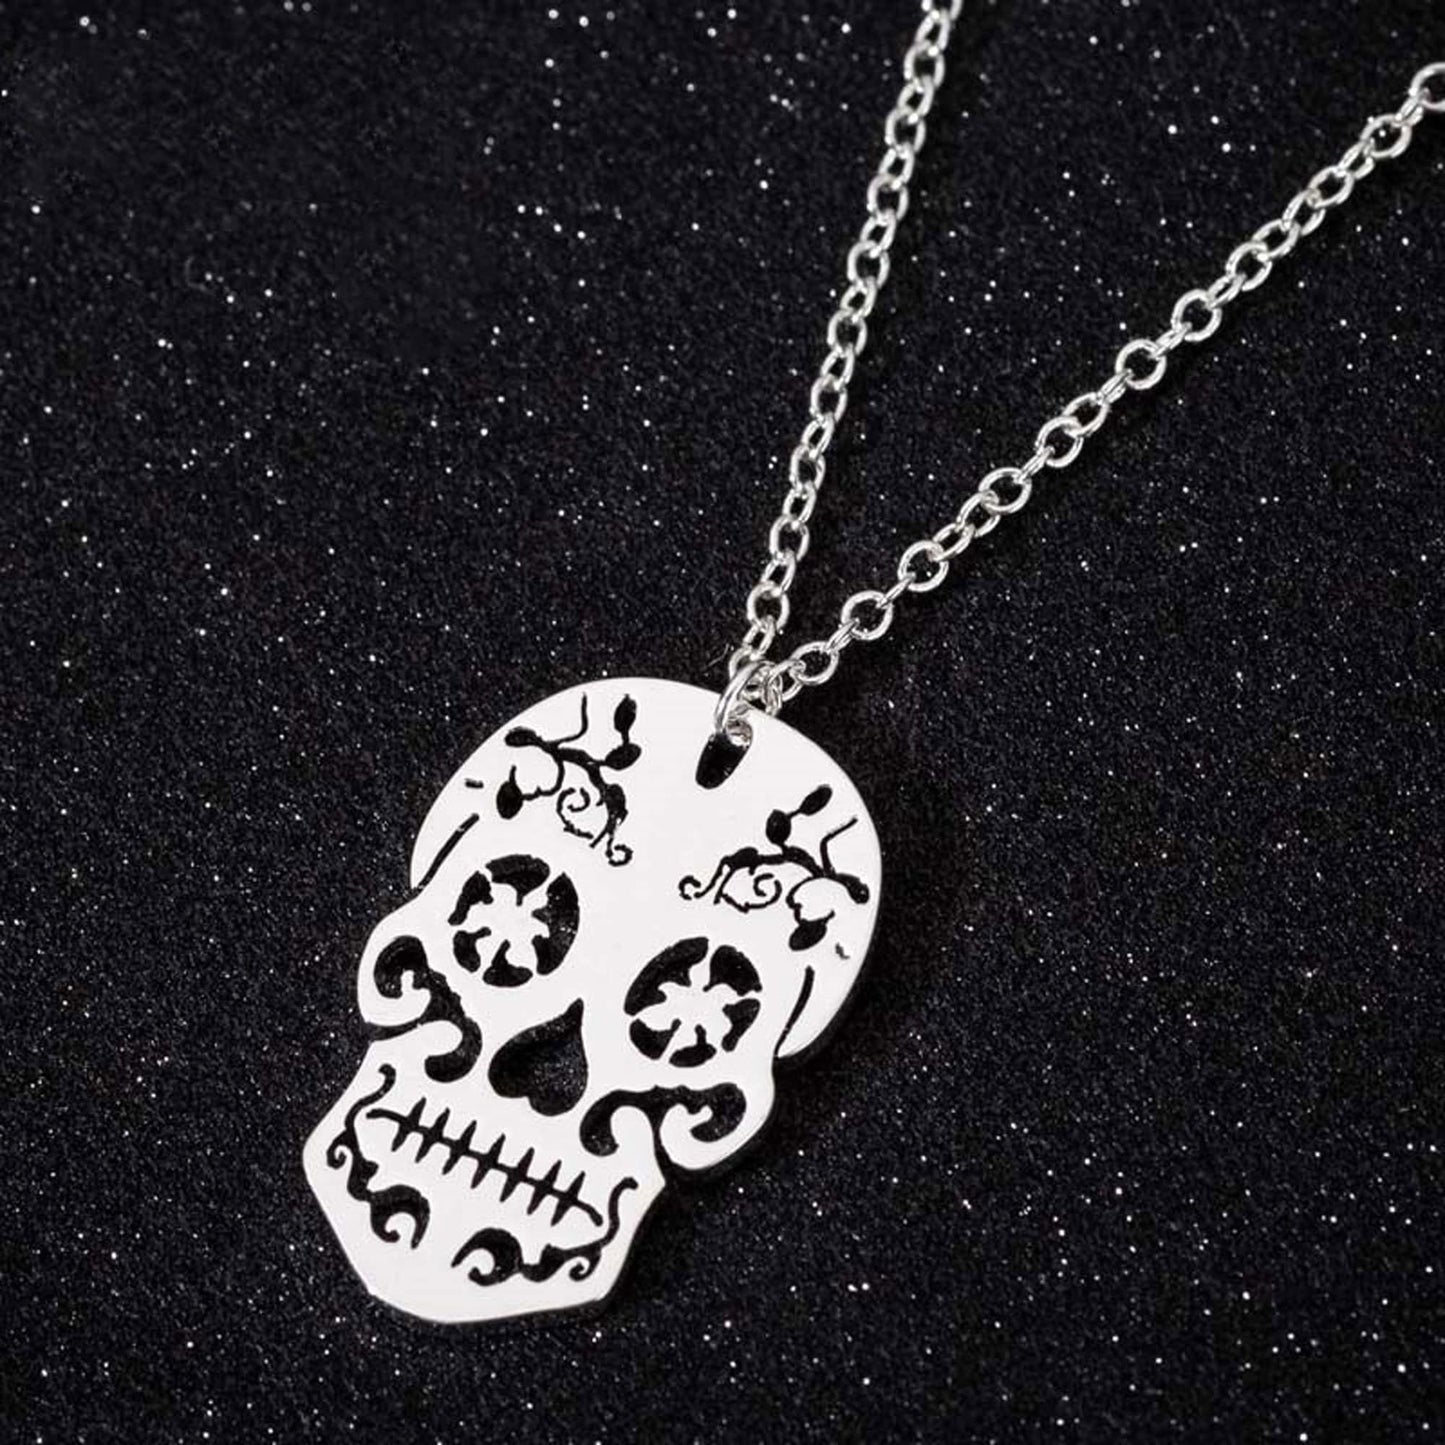 Vintage Skeleton Pendant/Necklace, Skull Pendant, Sugar Skull Pendant & Necklace, Mexican Inspired Jewelry, Ethnic Skull Necklace, Calavera